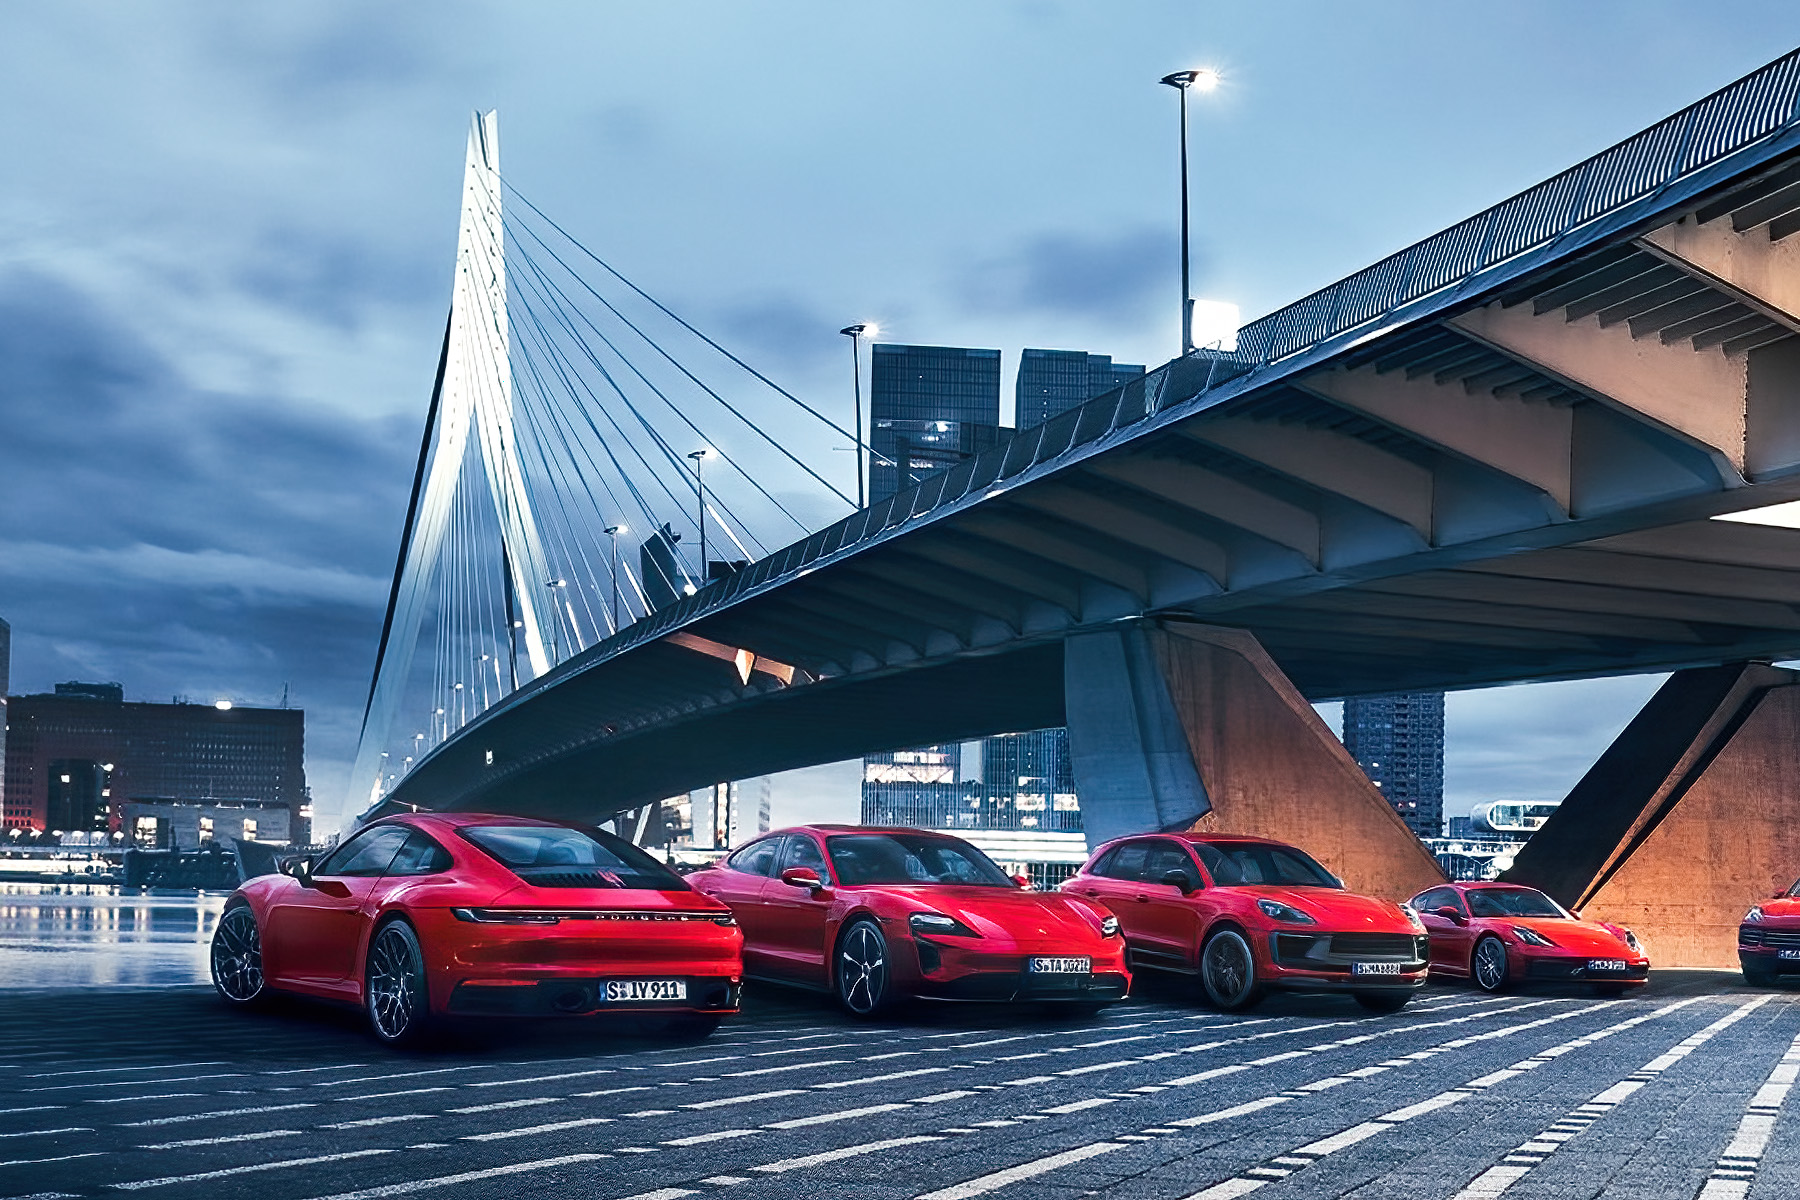 Porsche's 2022 models all in red.